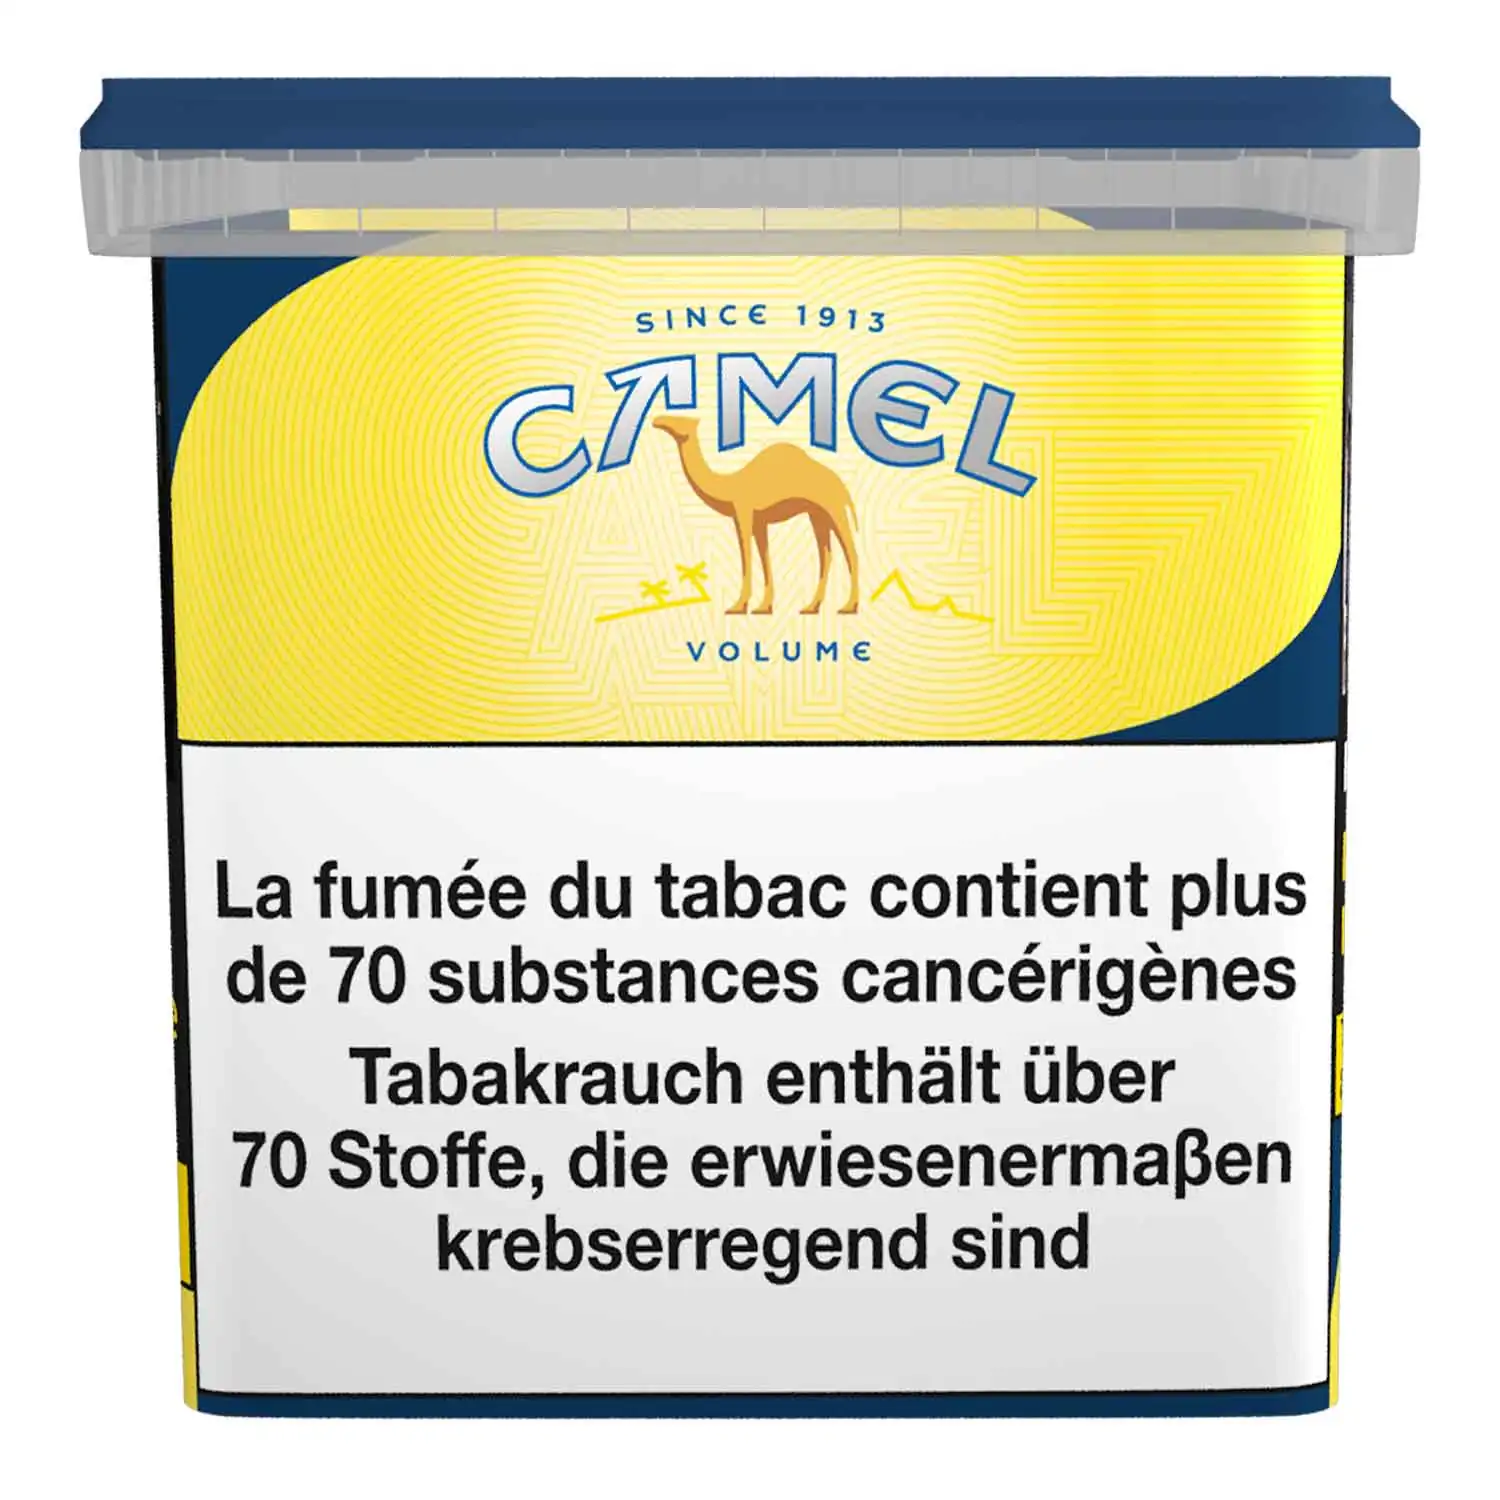 Camel volume yellow 400g - Buy at Real Tobacco